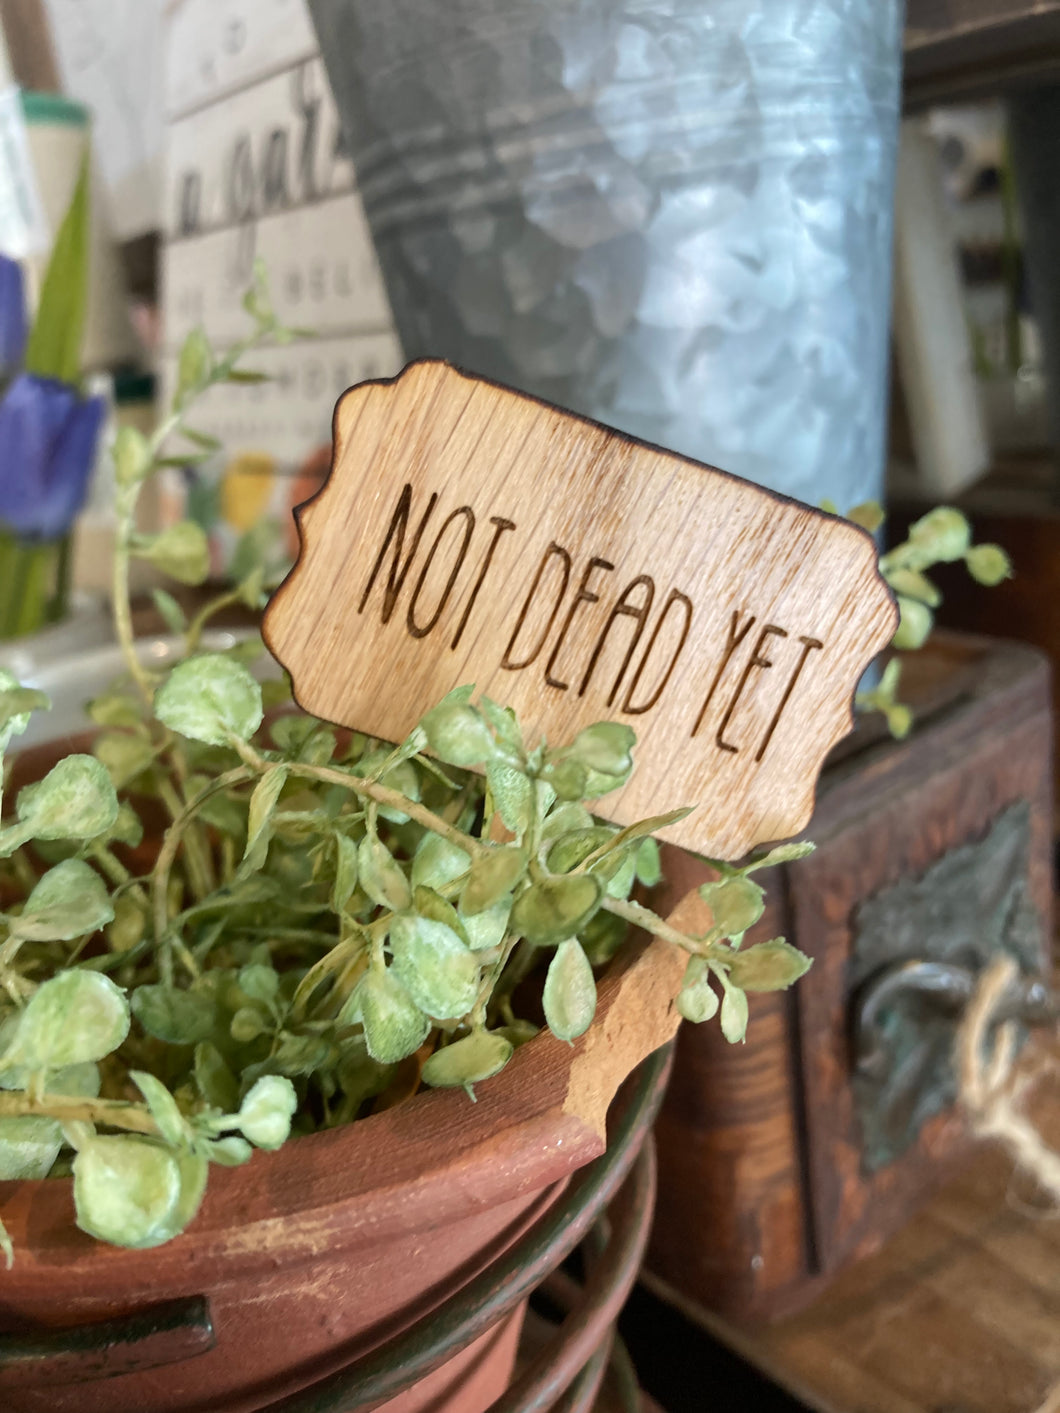 Not Dead Yet - Plant Marker